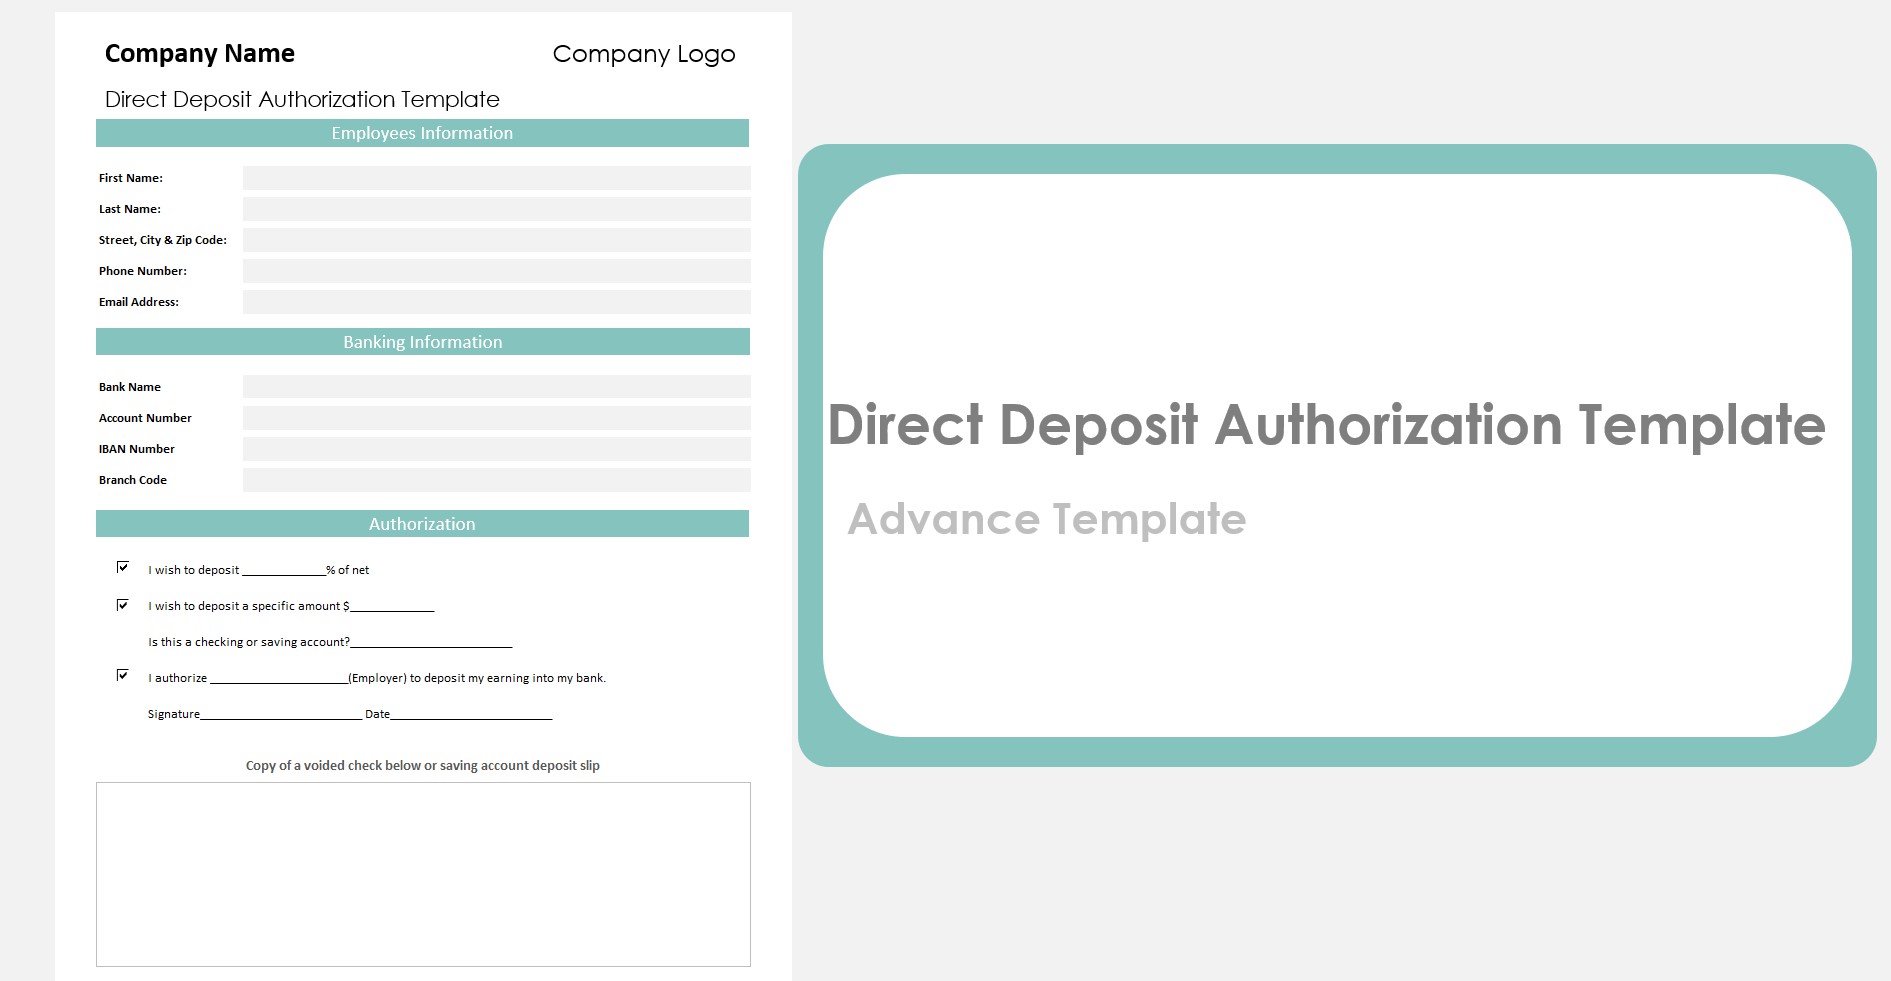 Direct Deposit Authorization Template